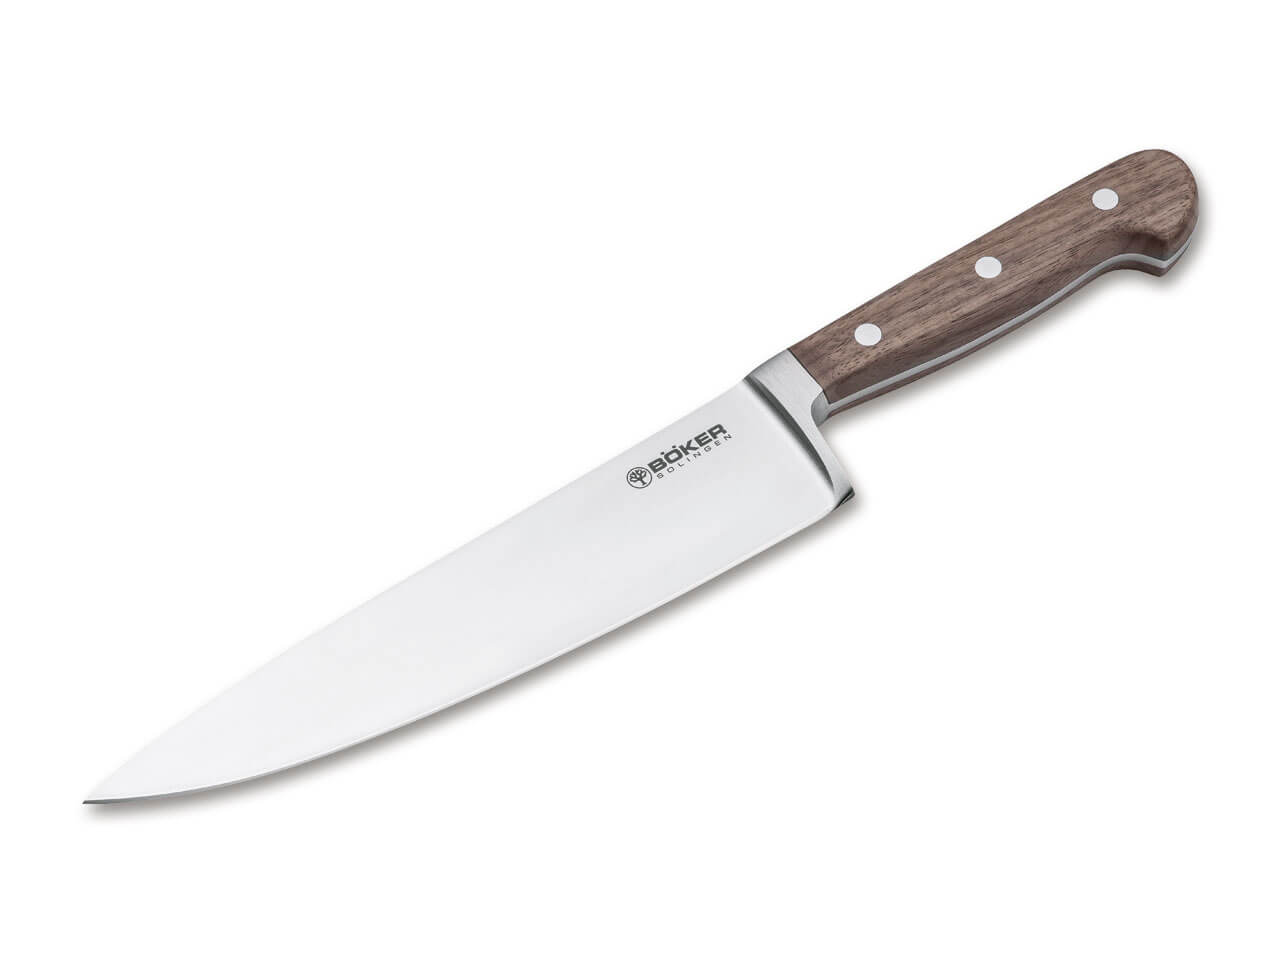 https://www.bokerusa.com/media/image/a1/db/f5/boeker-manufaktur-solingen-heritage-chef-s-knife-130906.jpg